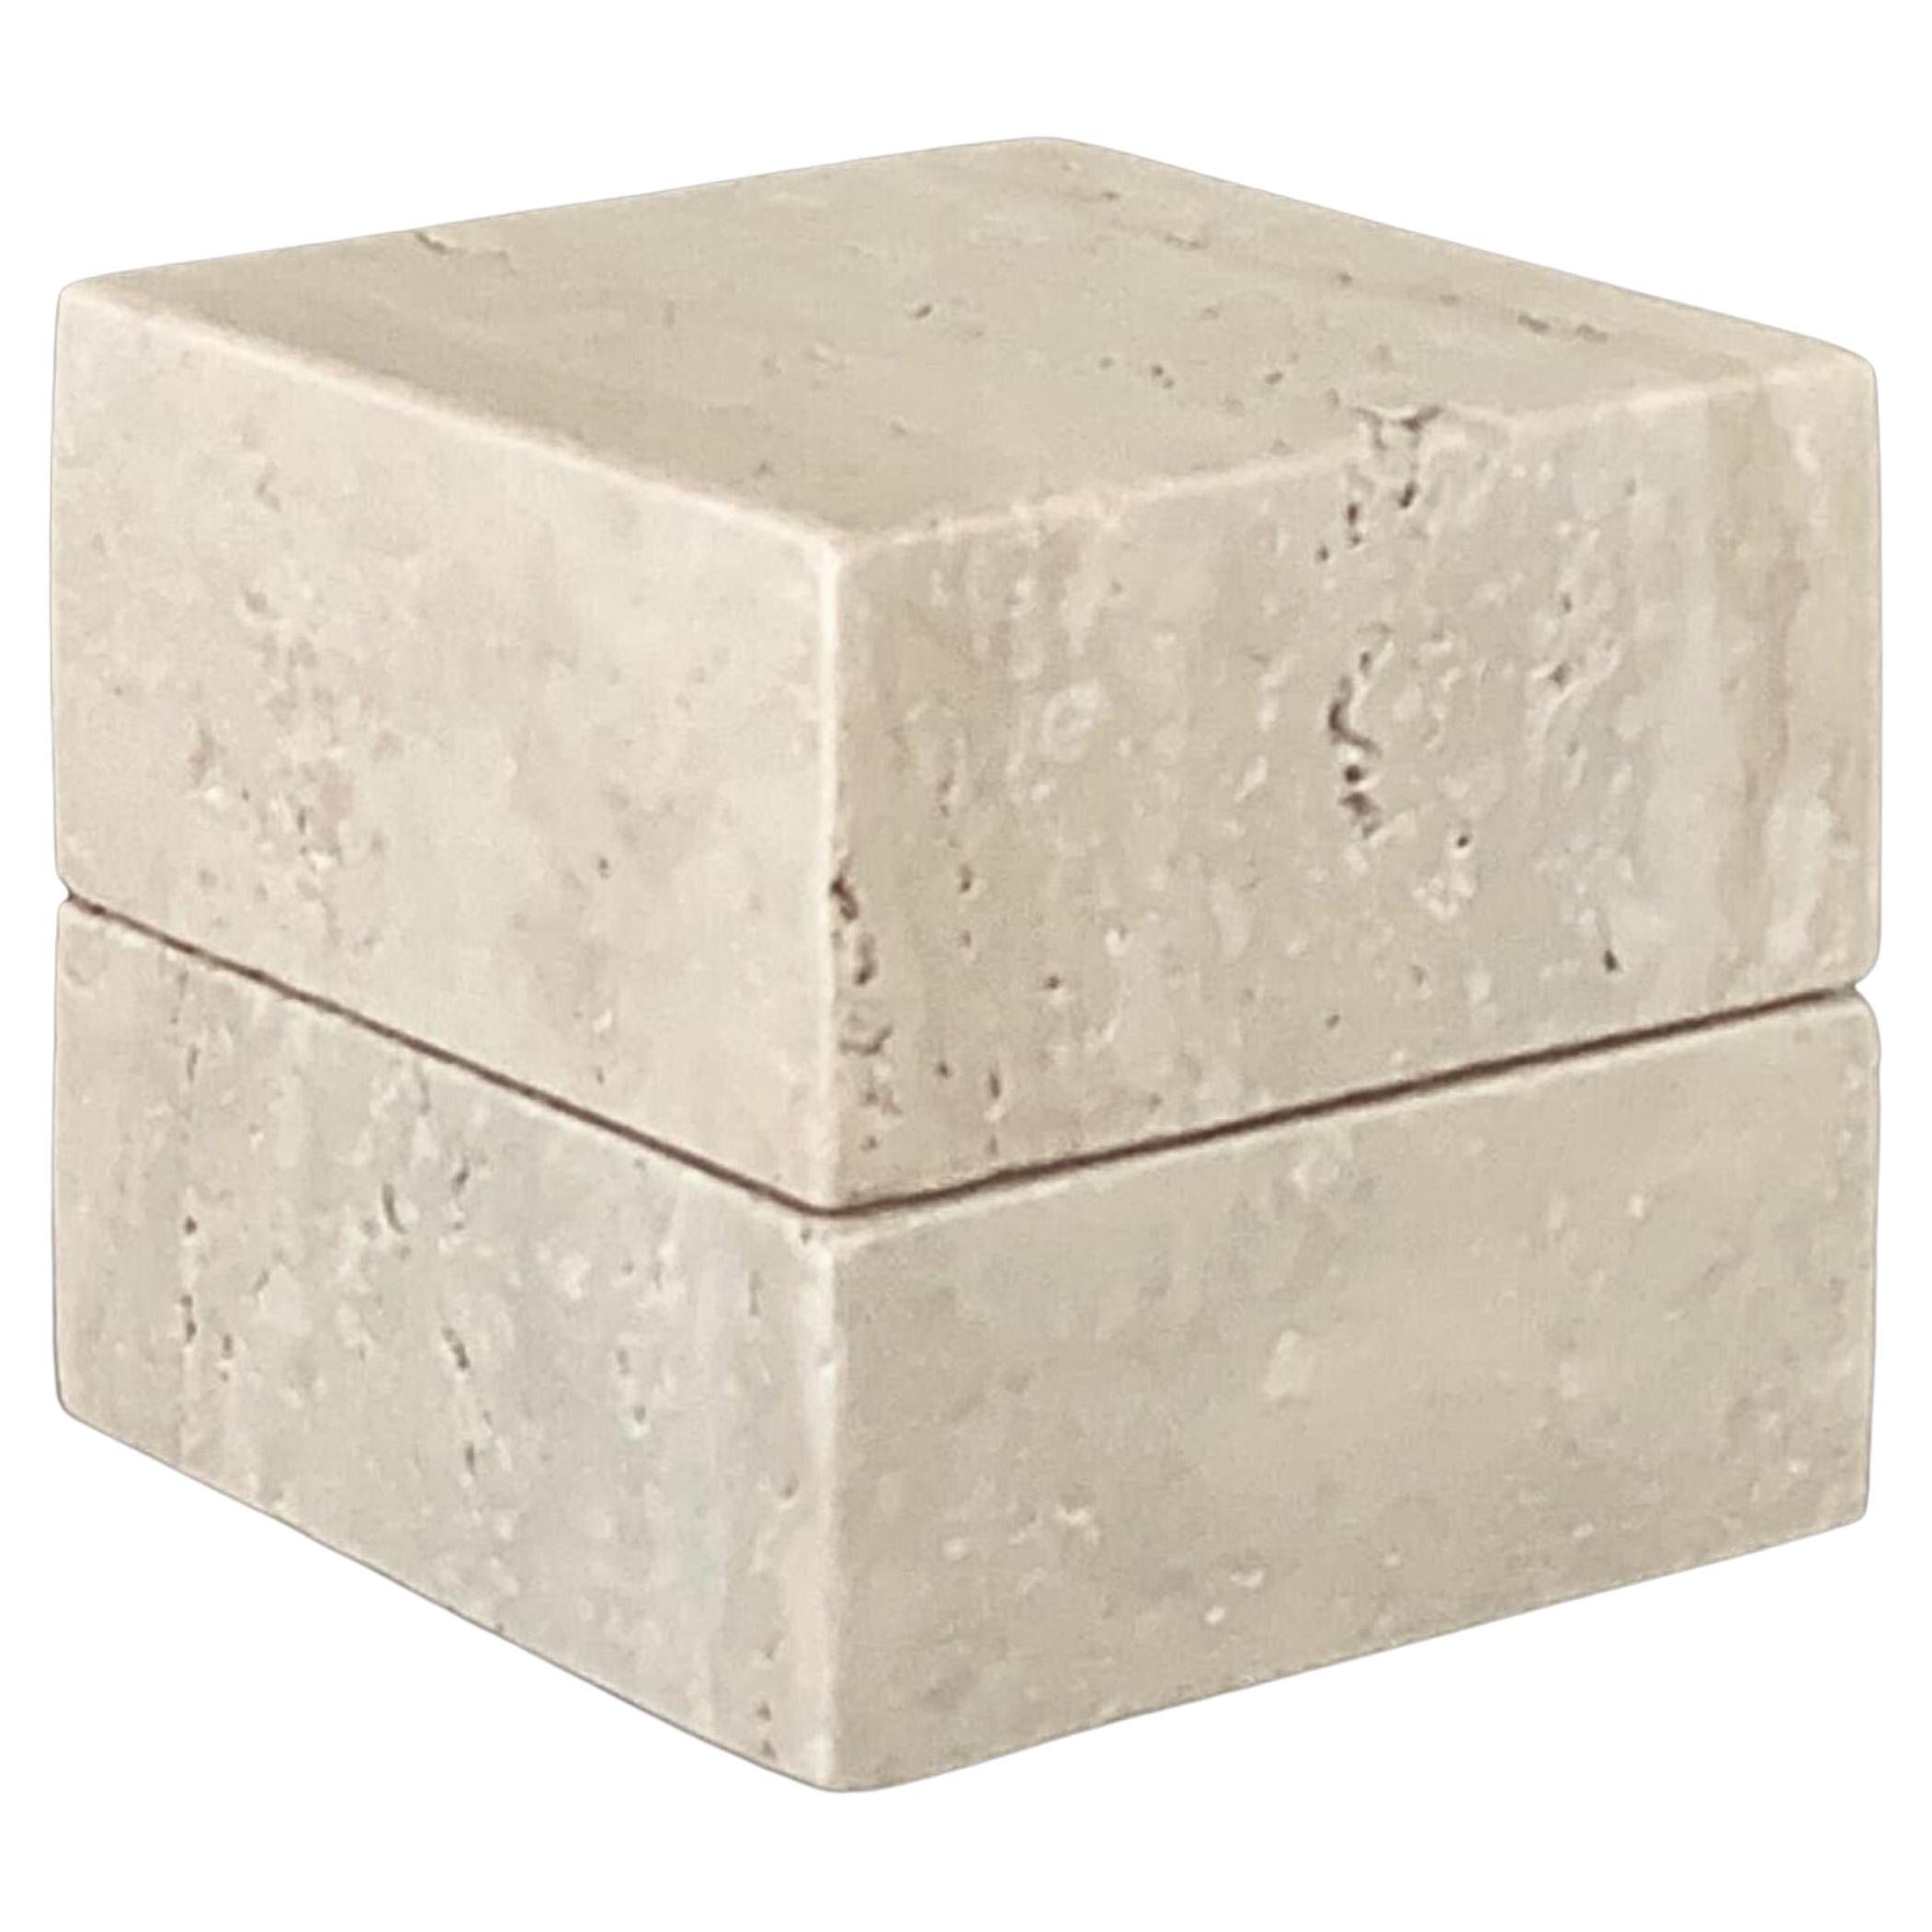 50/50 Box: Lidded Cube Box in Beige Travertine by Anastasio Home